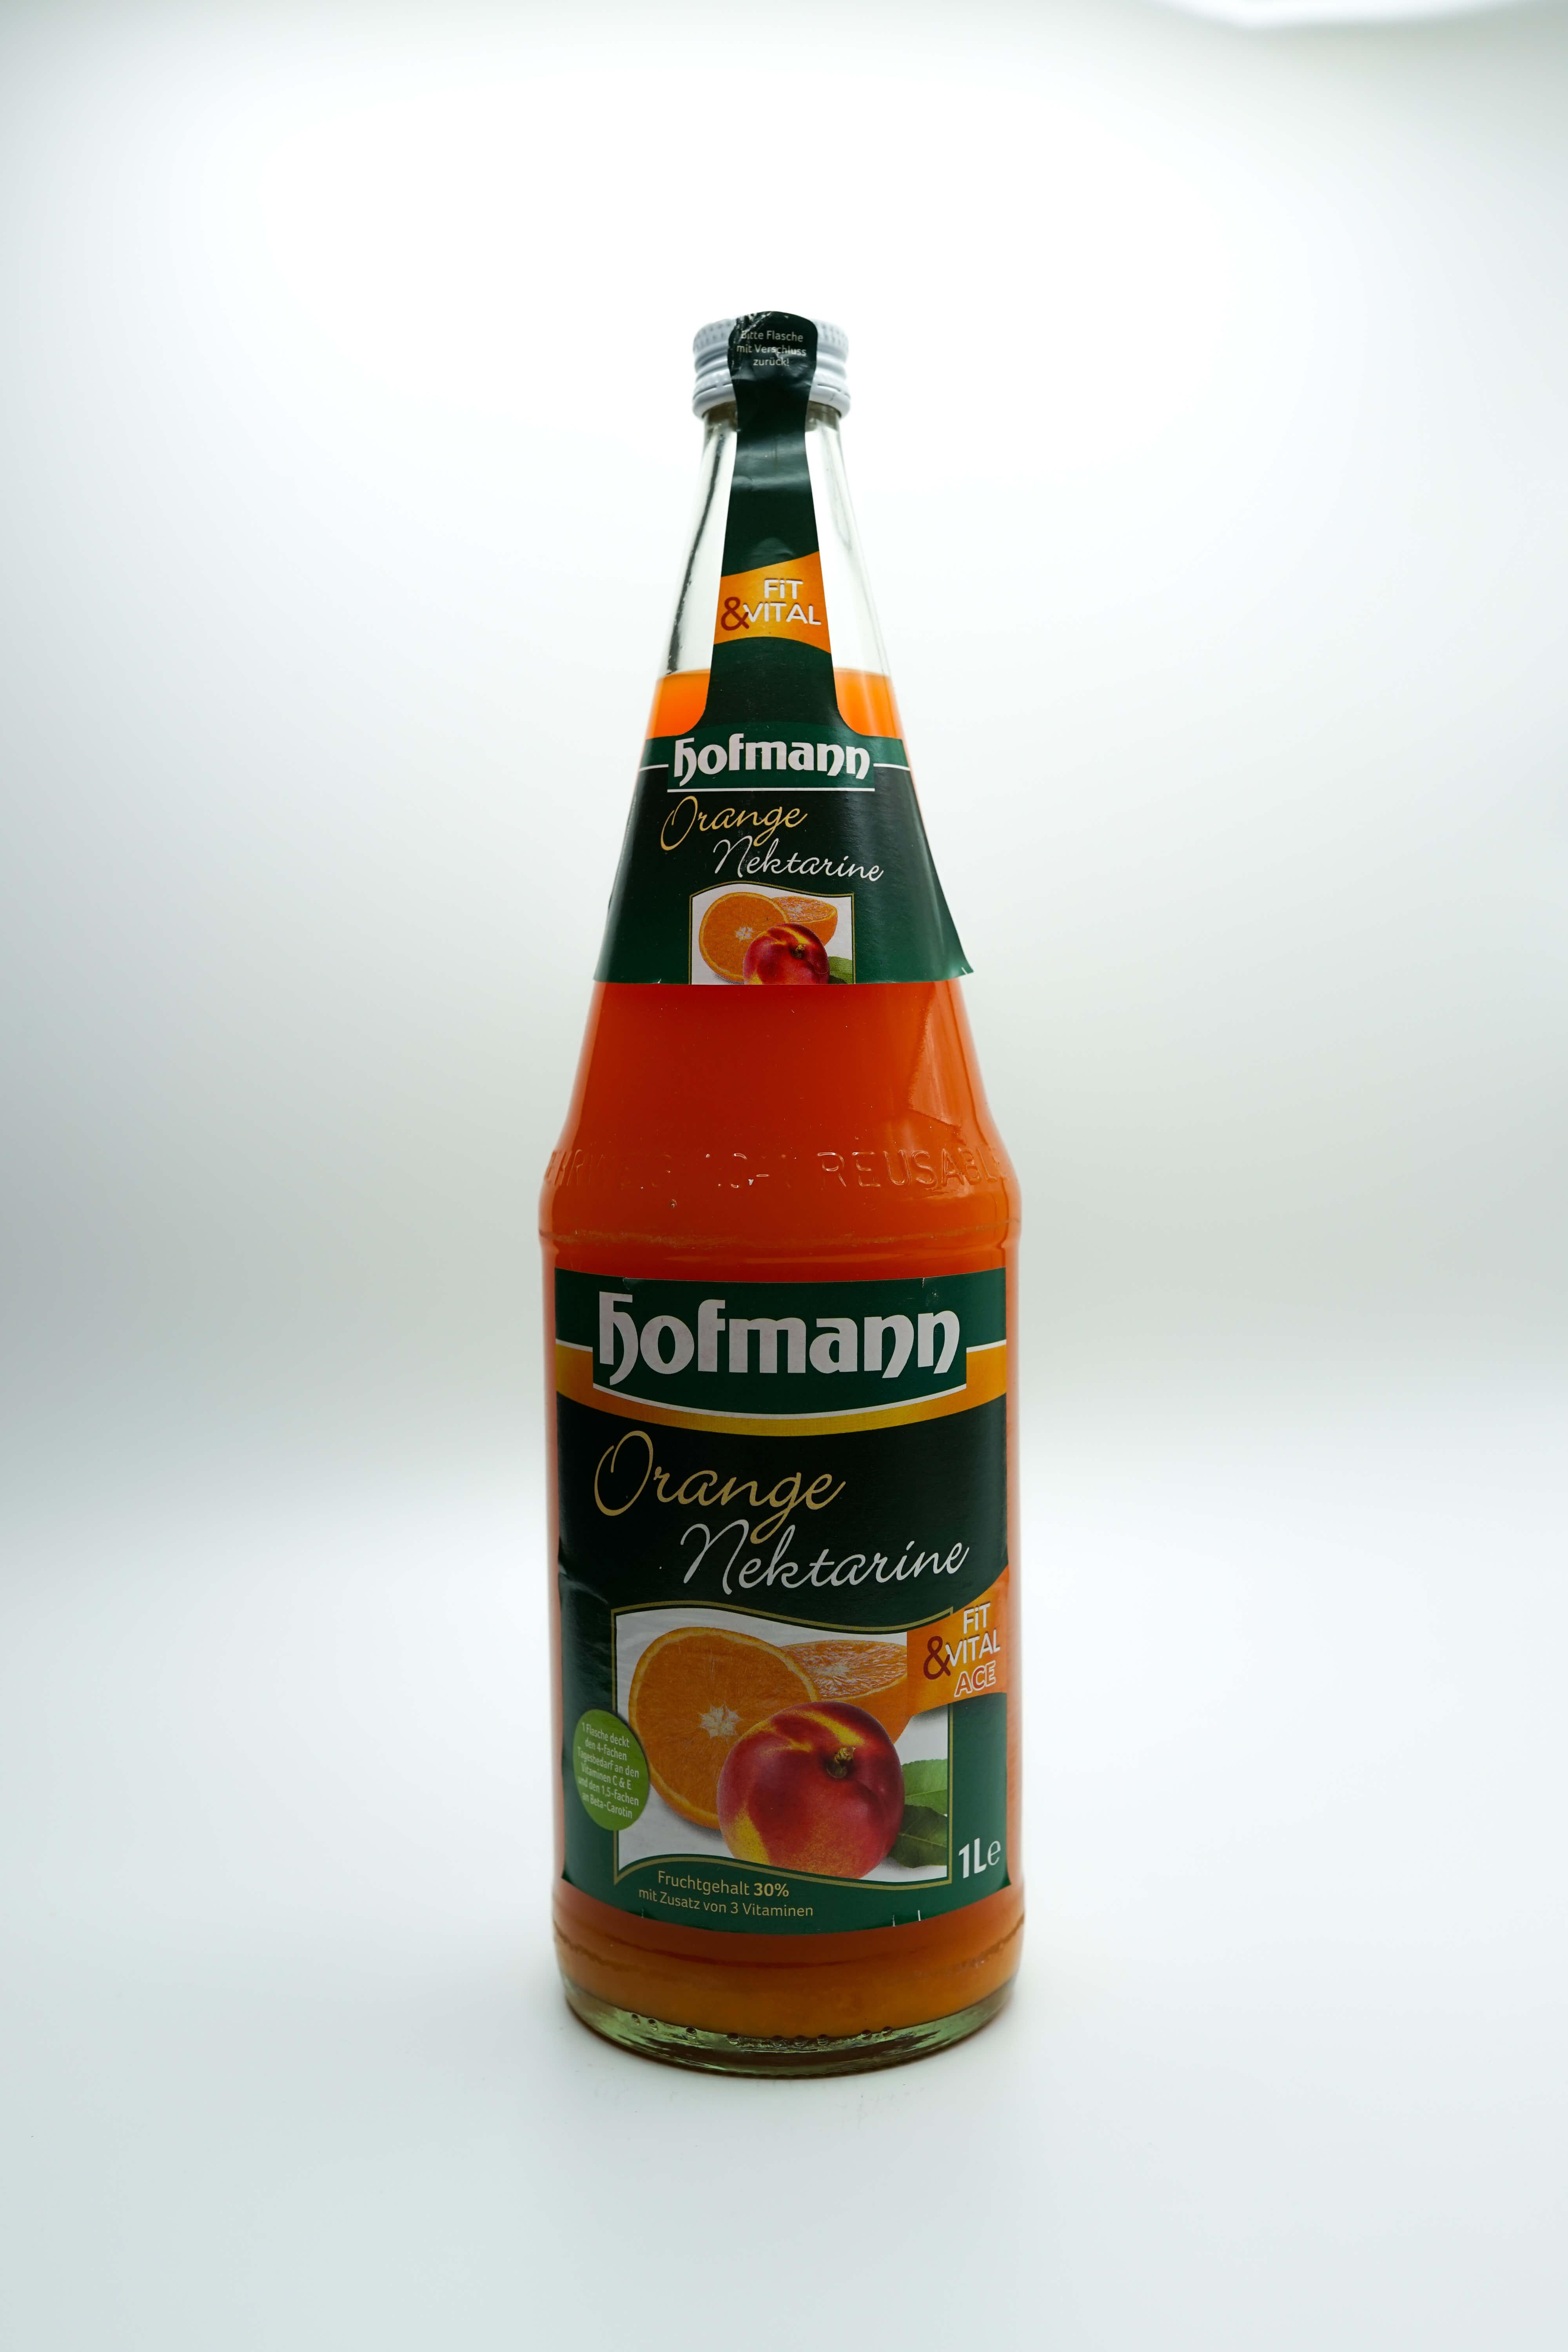 Hofmann Orange-Nektarine